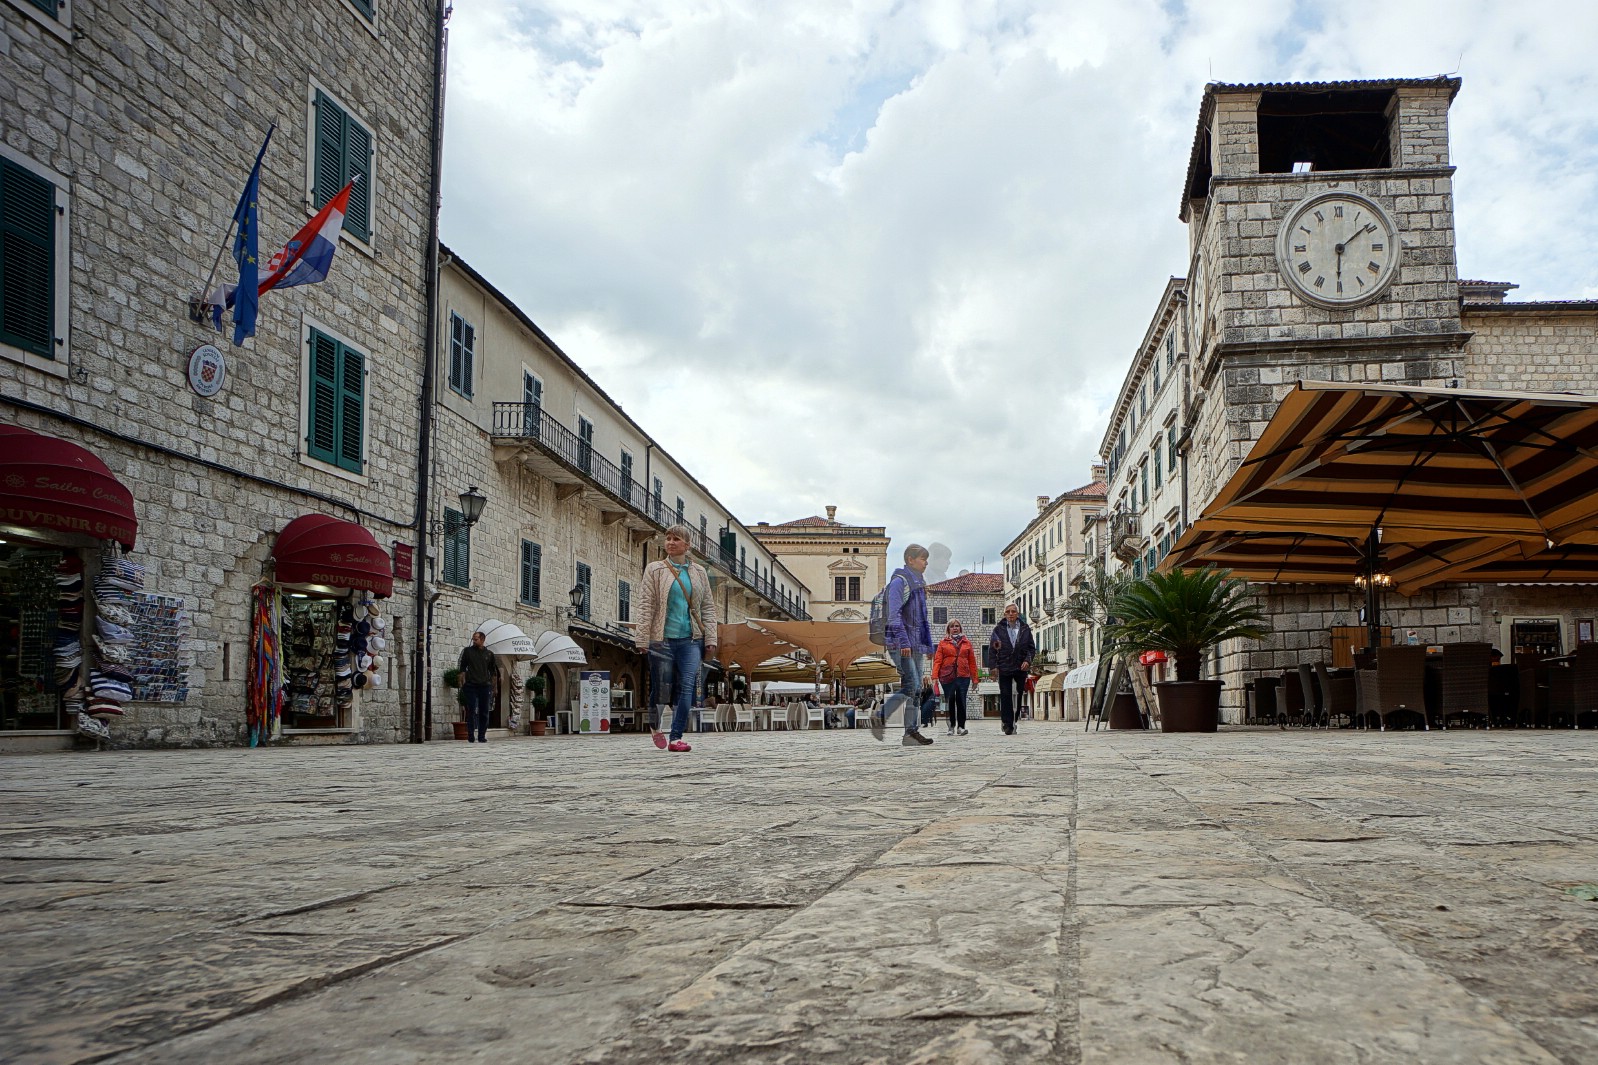 Trg od Oruzja (Arms Square) of Stari Grad (Old Town) Kotor, Montenegro. April 19, 2017.